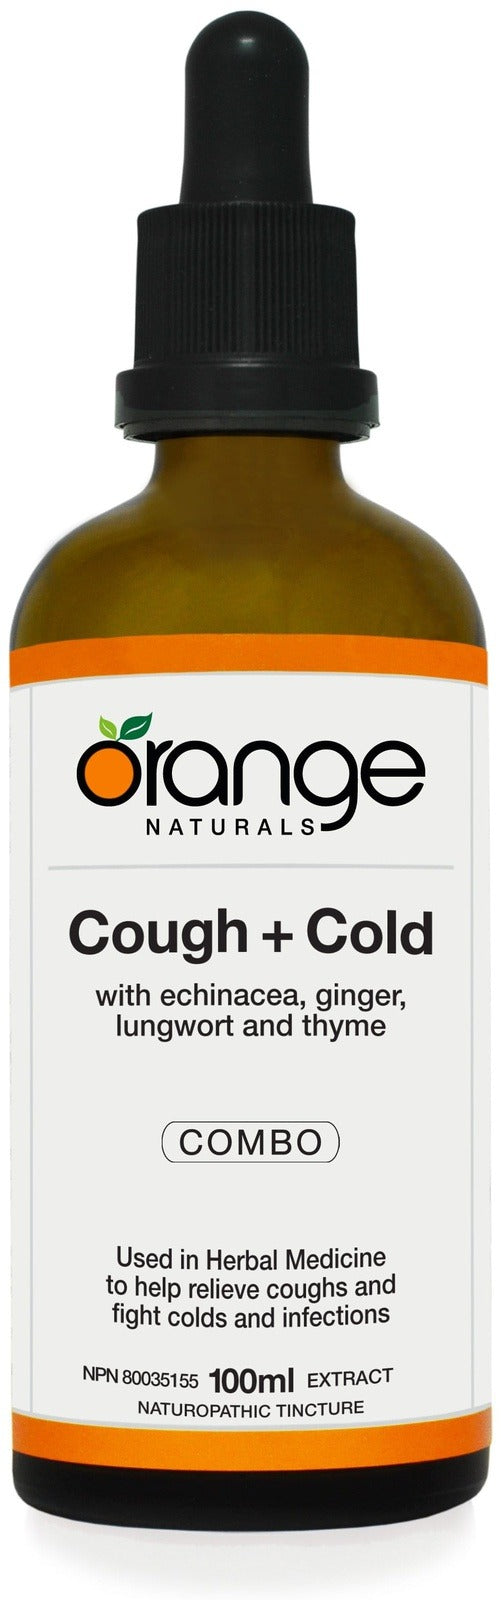 Orange Naturals Cough+Cold Combo Tincture 100 mL Image 1